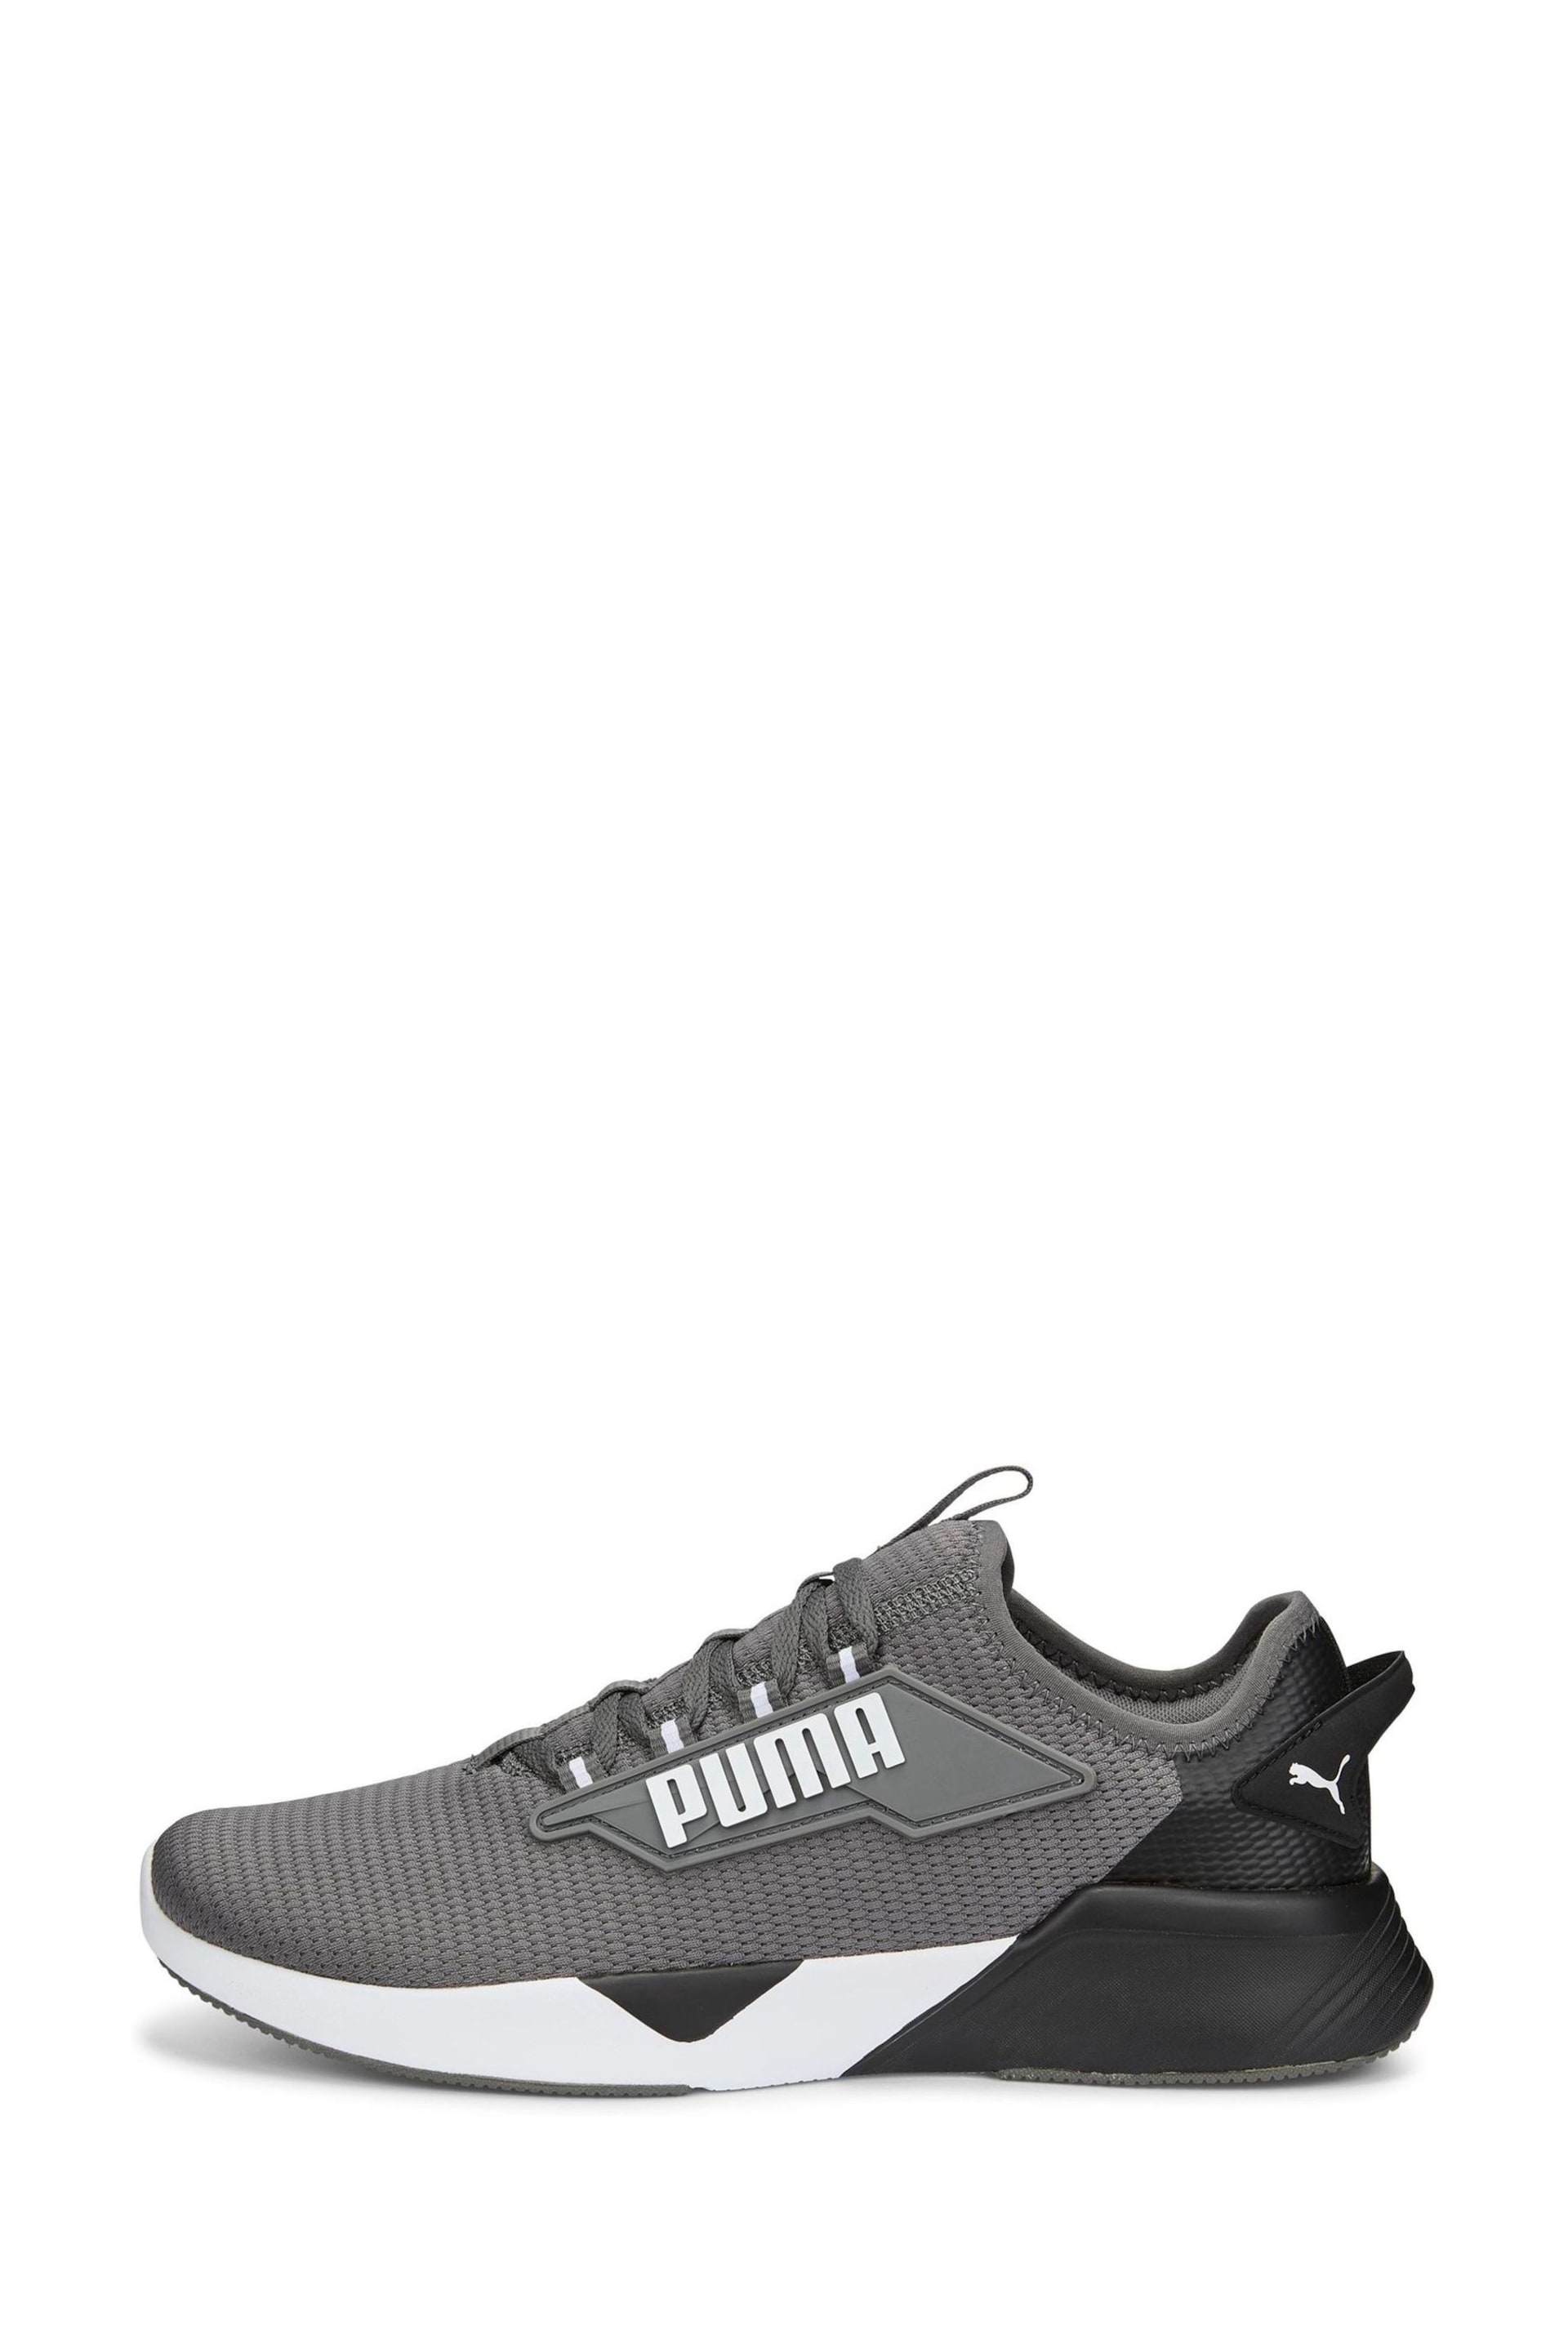 Puma Grey Retaliate 2 Running Shoes - Image 1 of 1